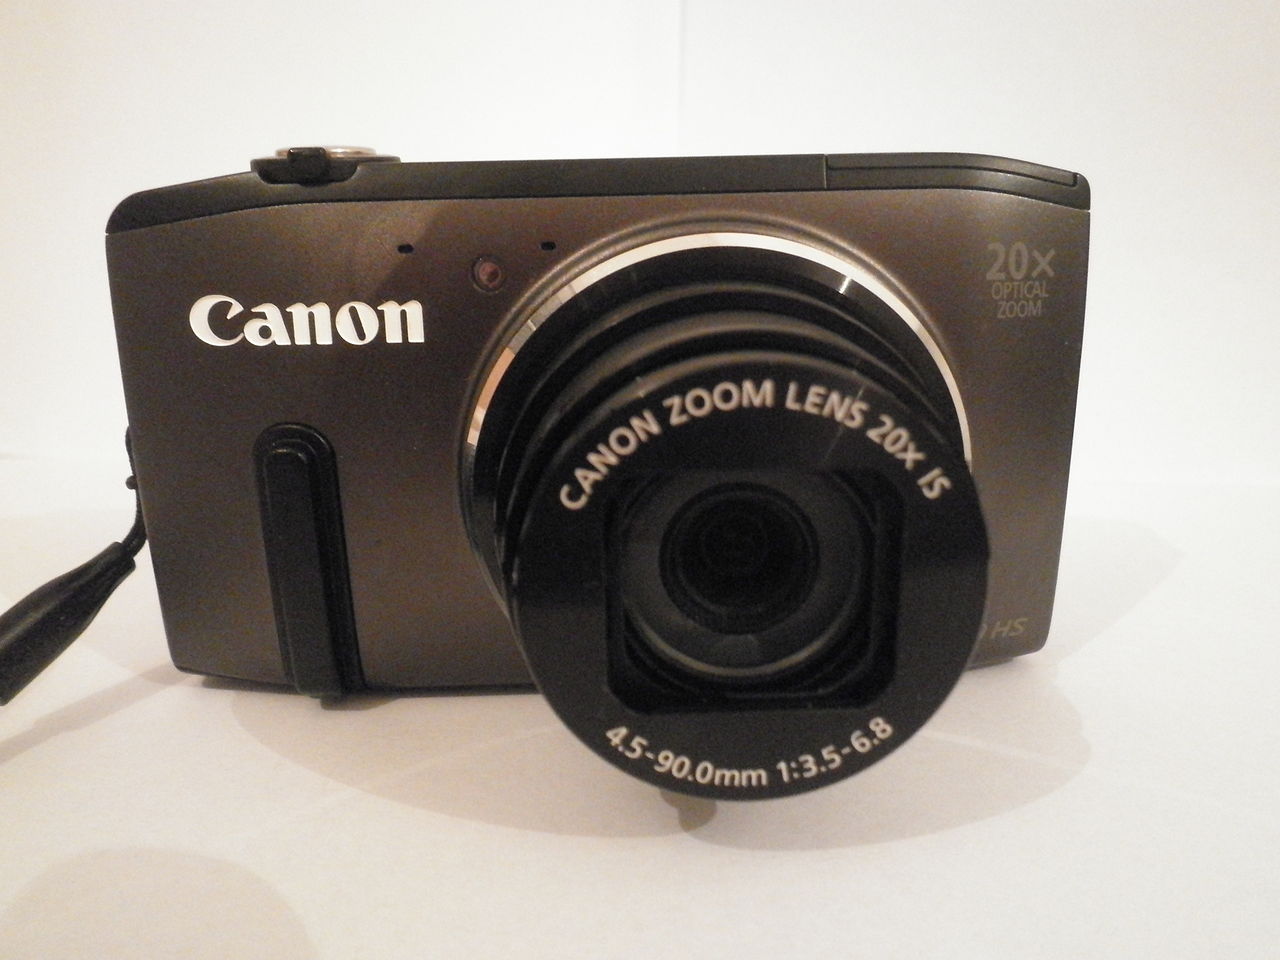 per ongeluk leider Kreek File:Canon PowerShot SX270 HS.JPG - Wikimedia Commons